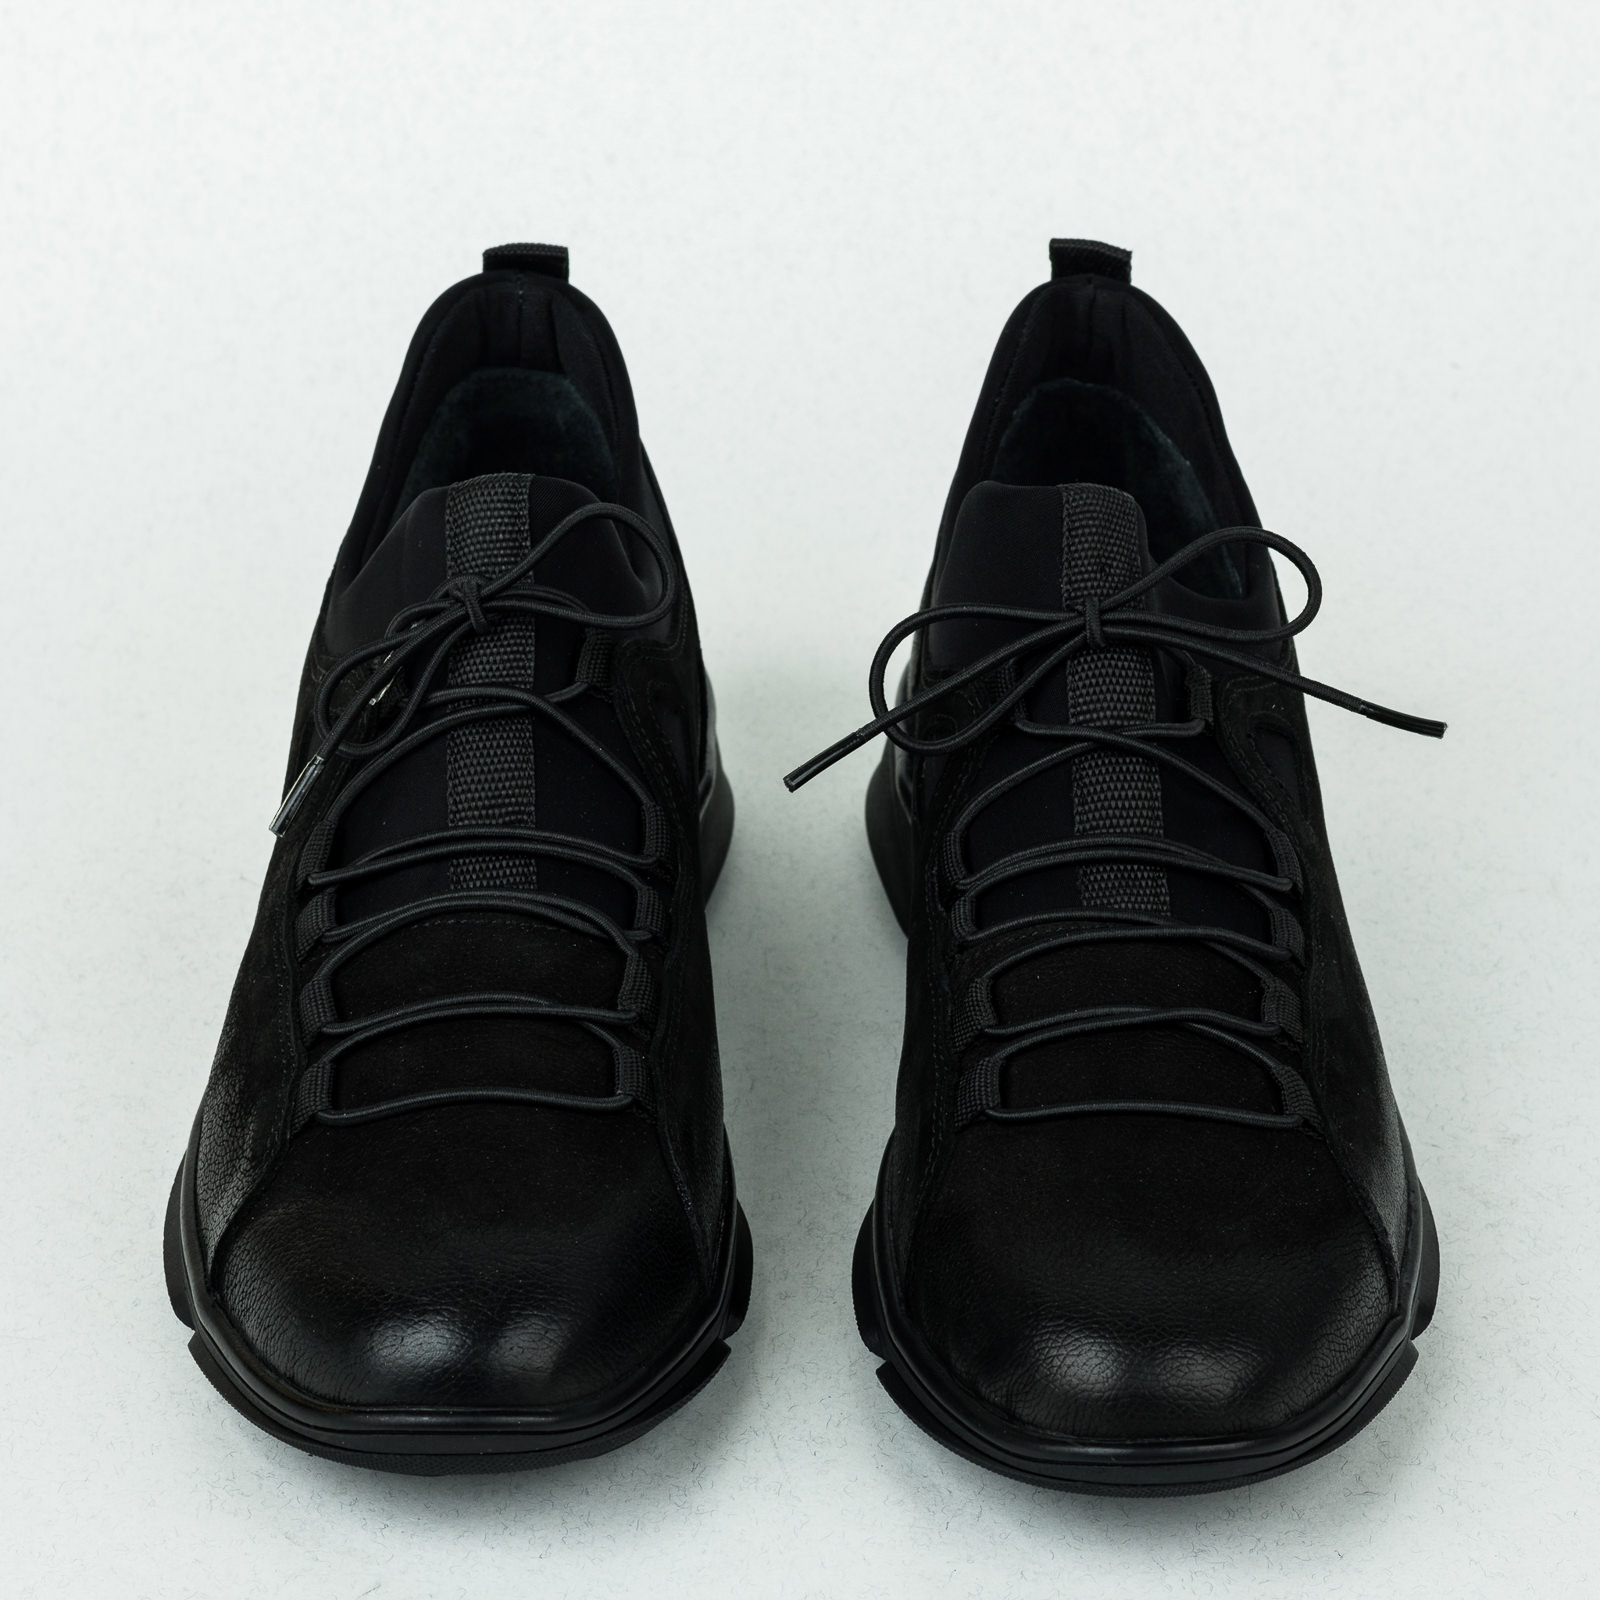 Leather shoes & flats B271 - BLACK